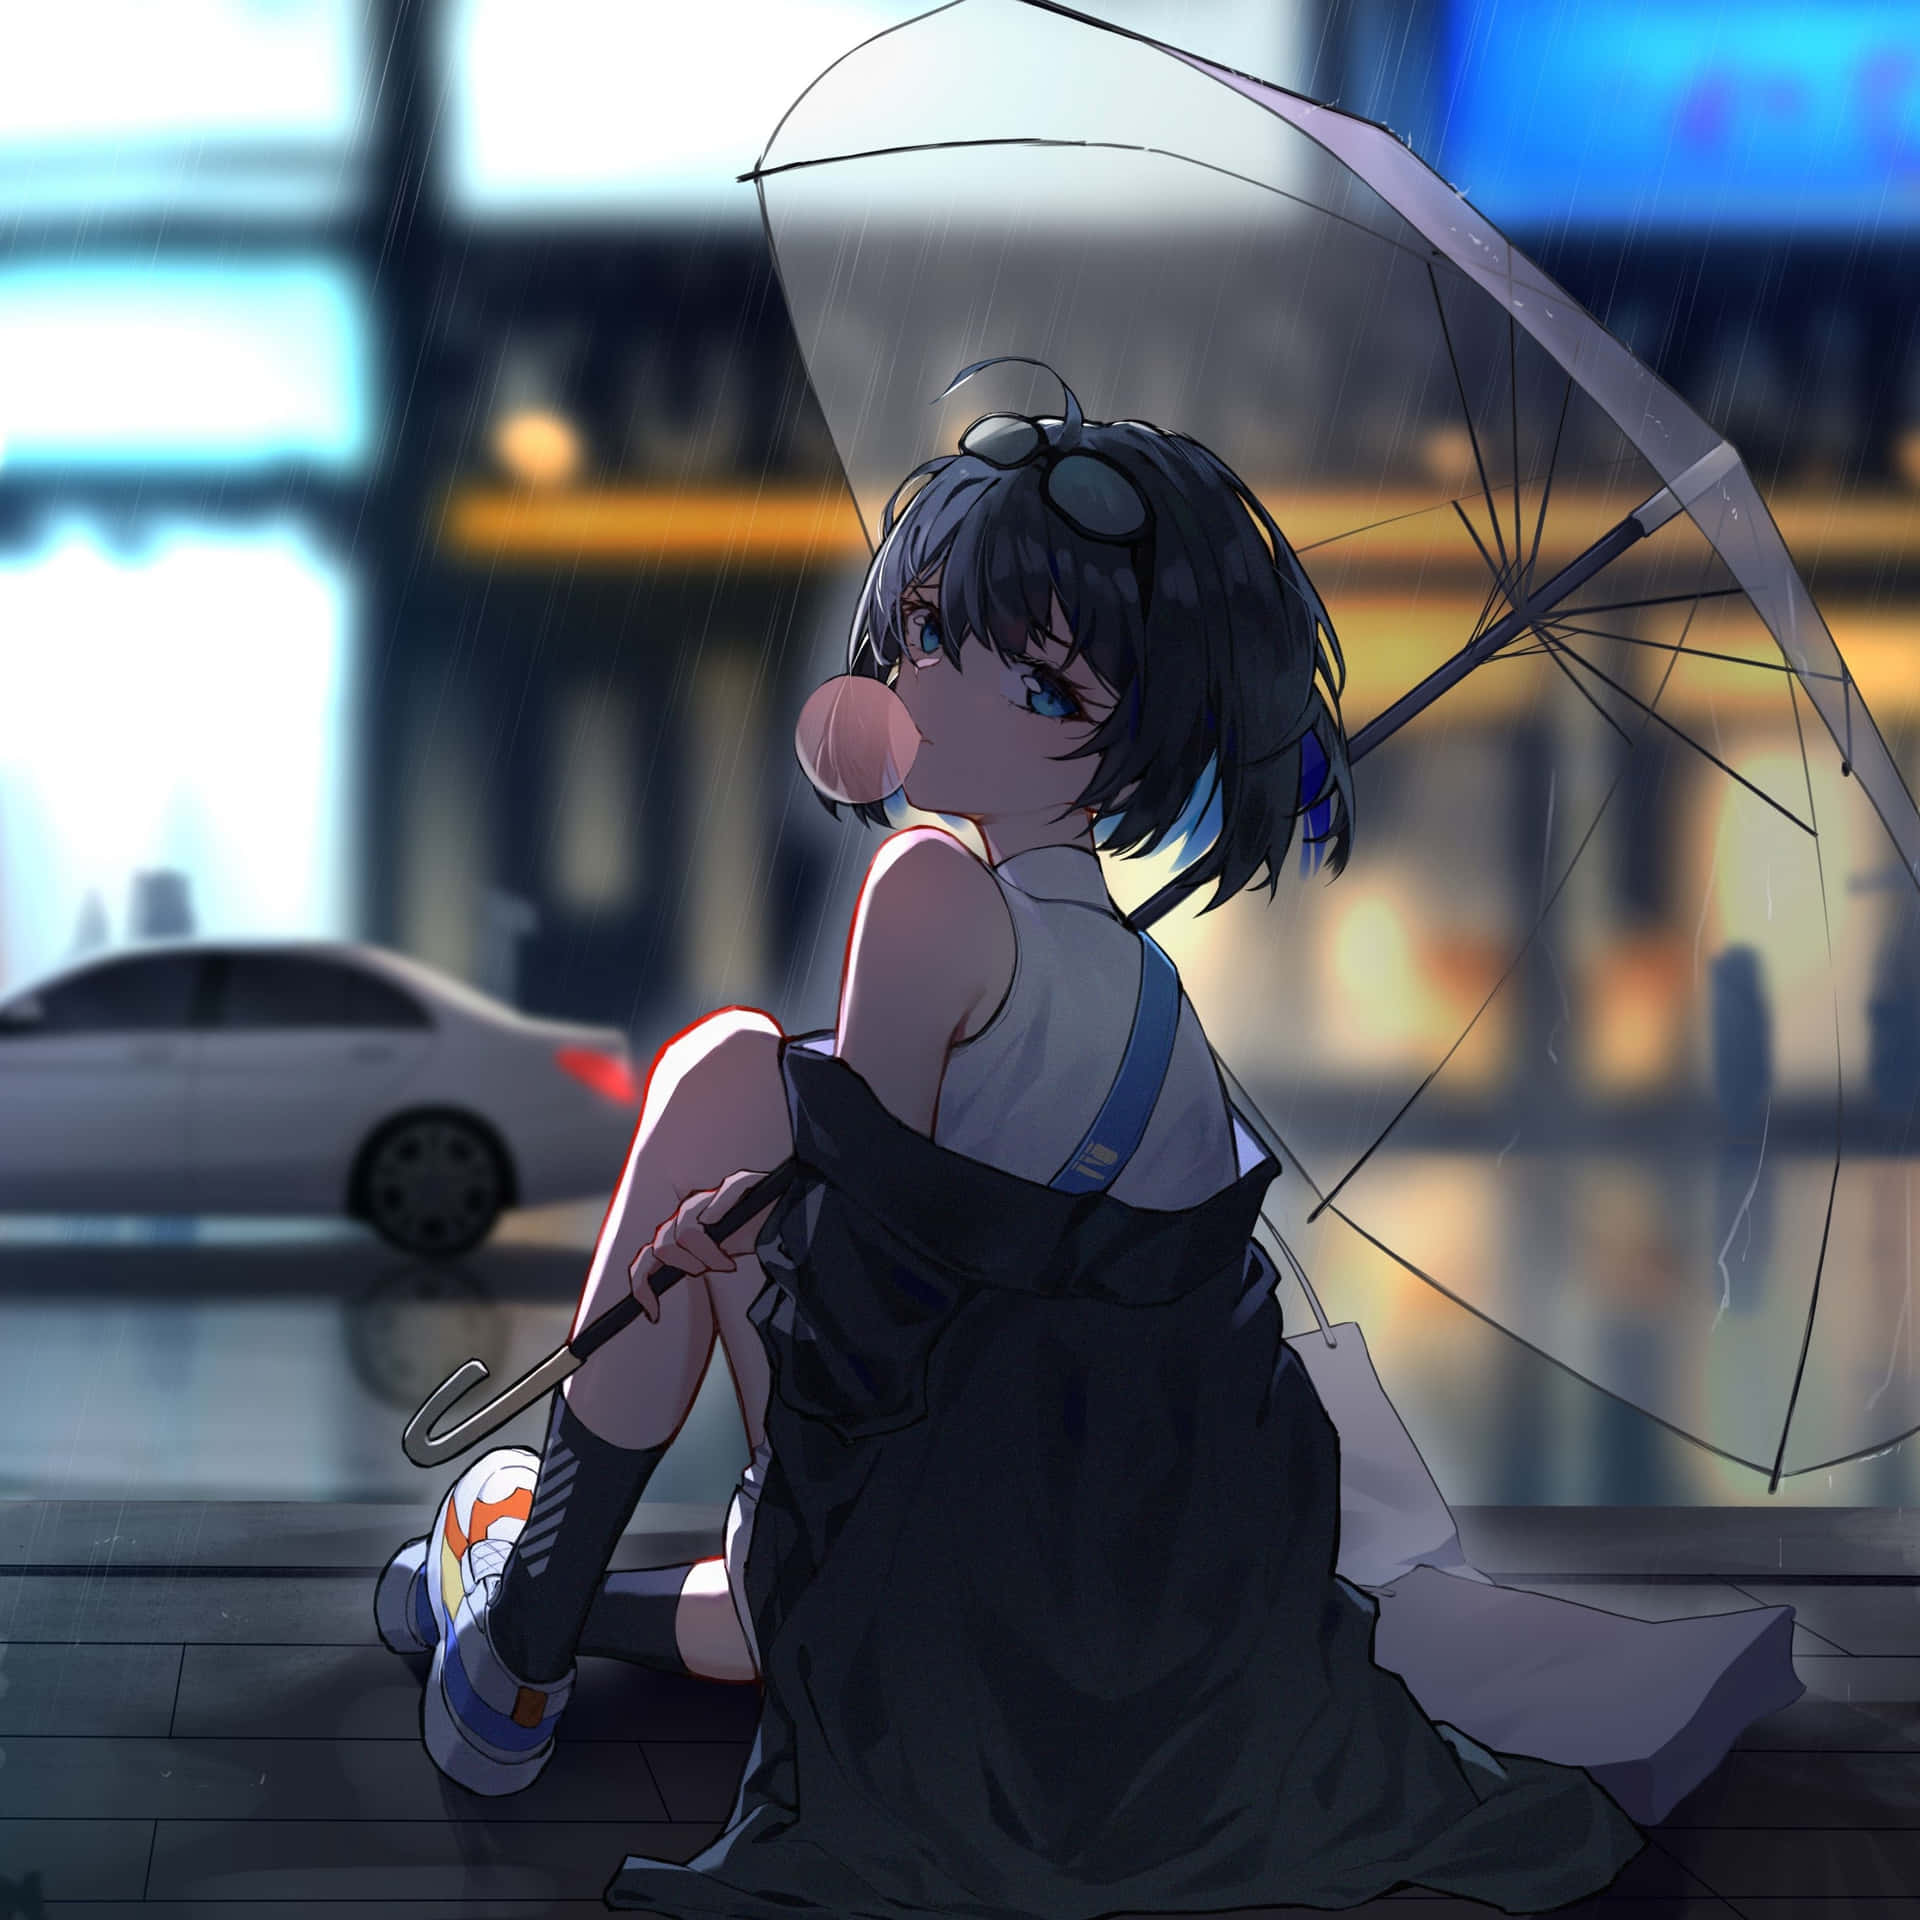 Cool Anime City Girl With Umbrella IPad Wallpaper